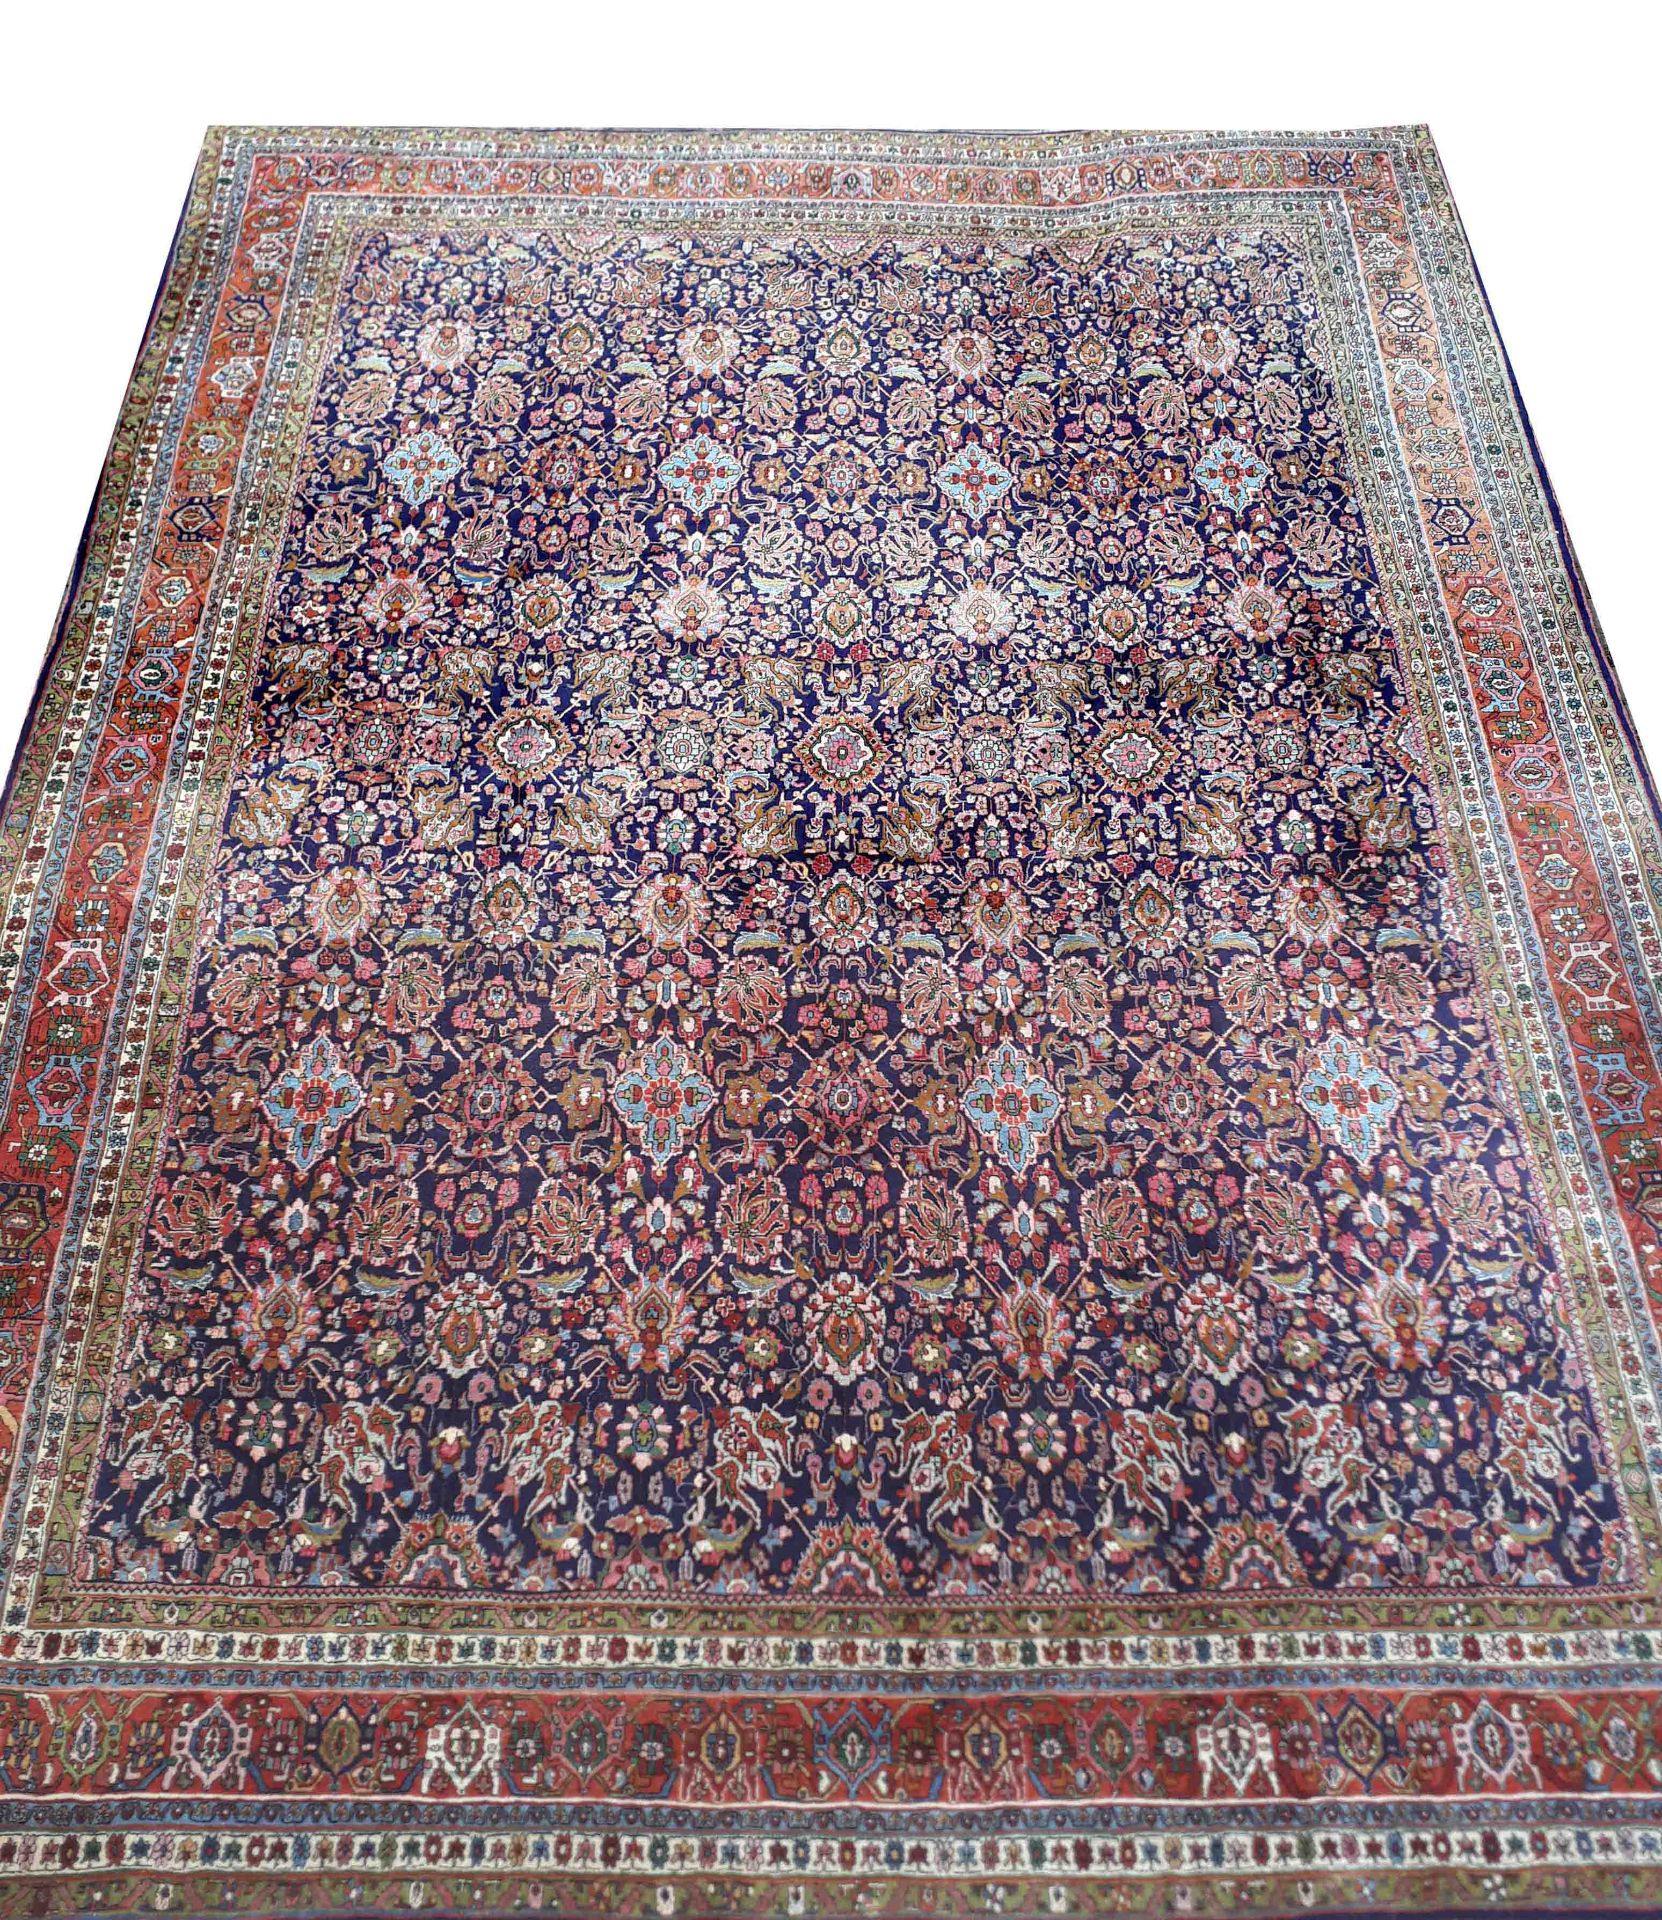 Carpet, approx. 350 x 450 cm